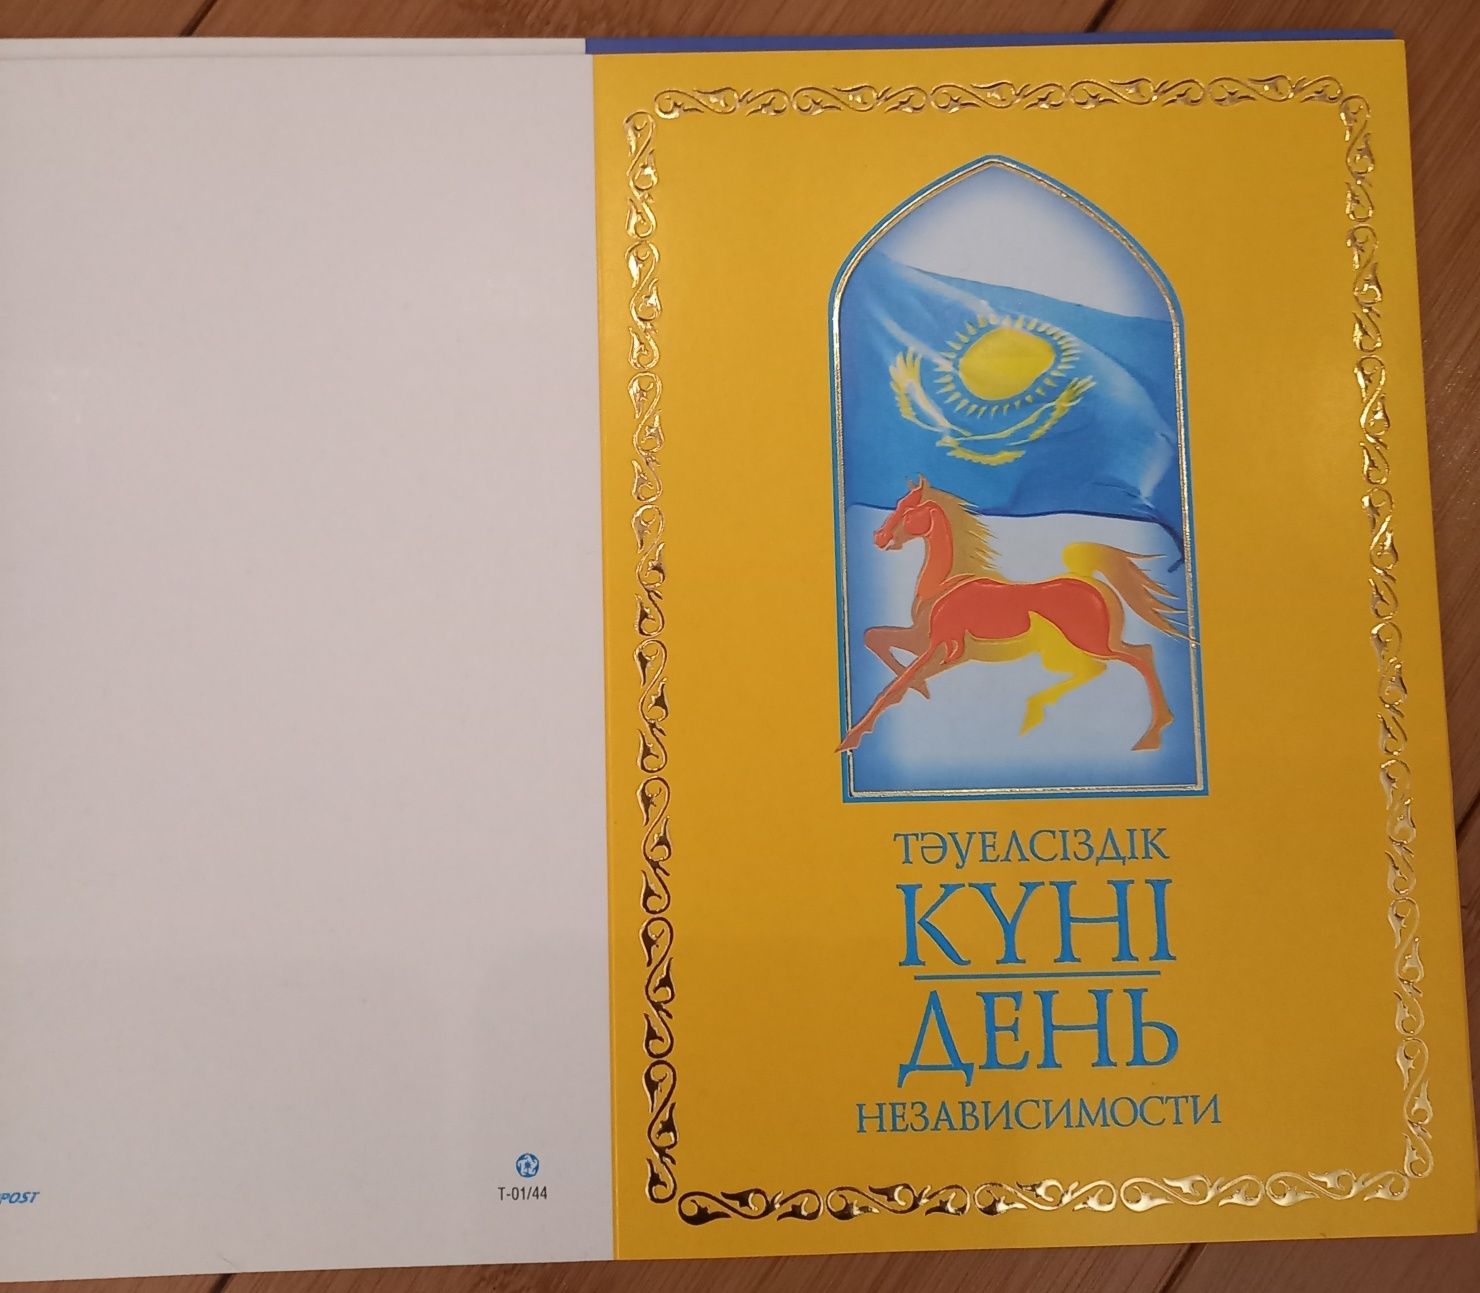 Сувенирные наборы за всё 1000тт открытки Алматы, ландшафты Казахстана